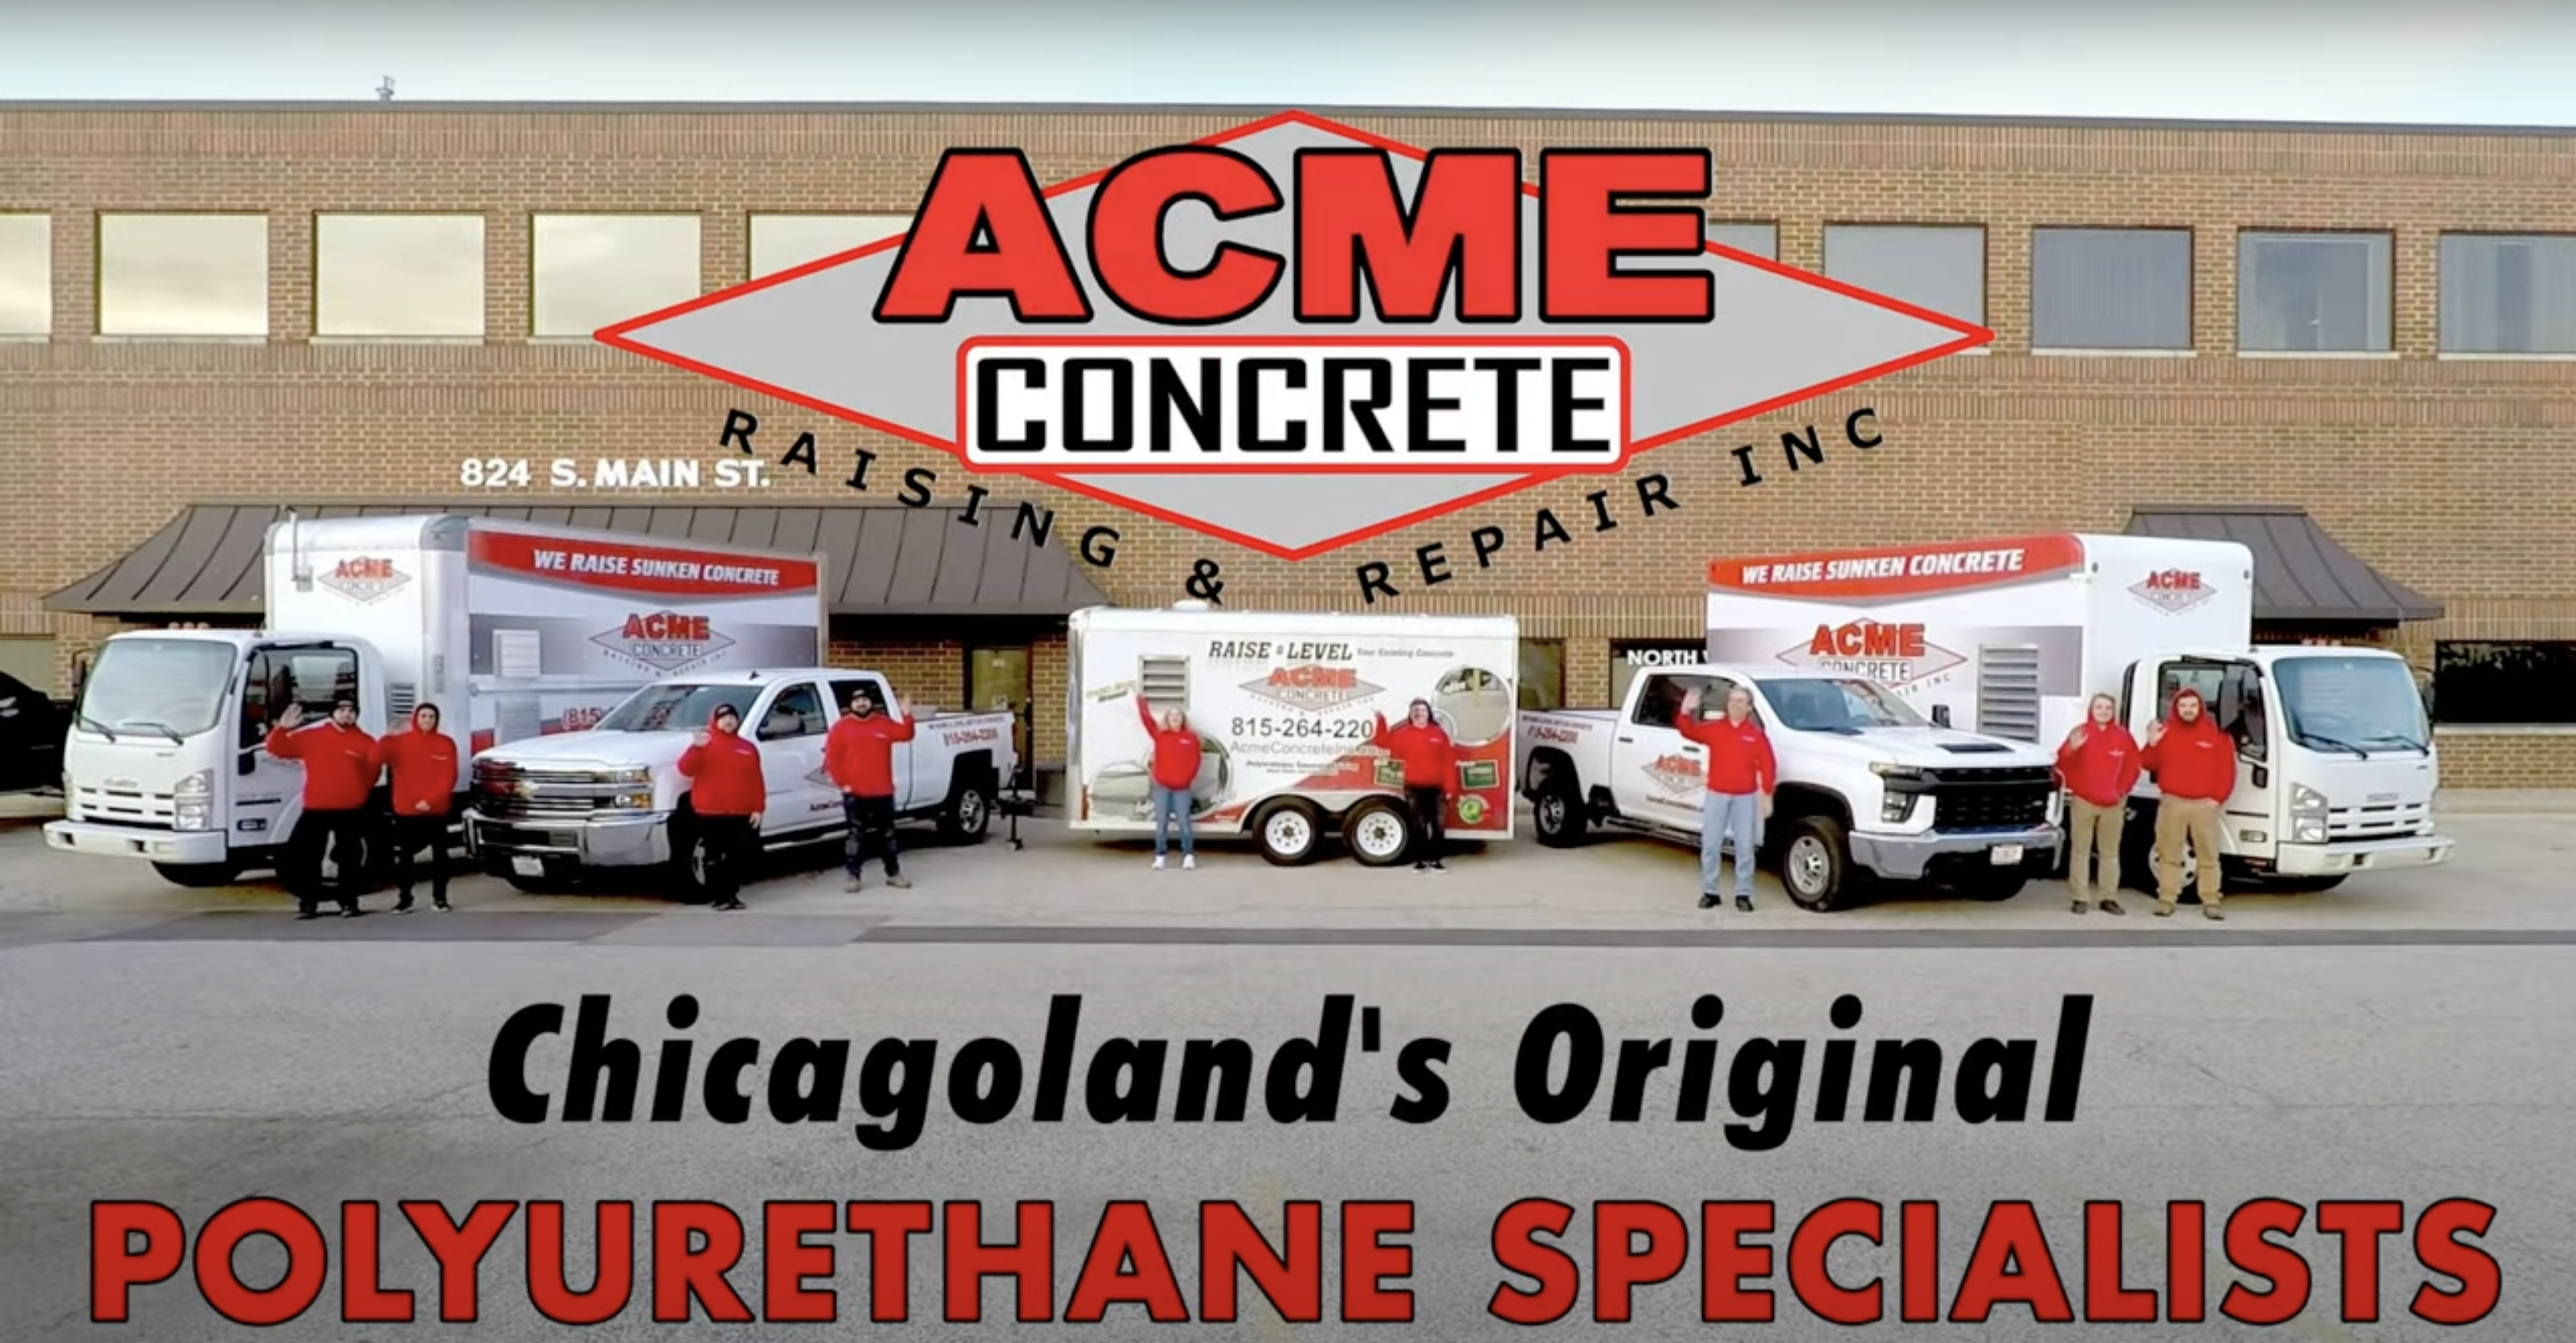 acme concrete raisin and repair introduction staff